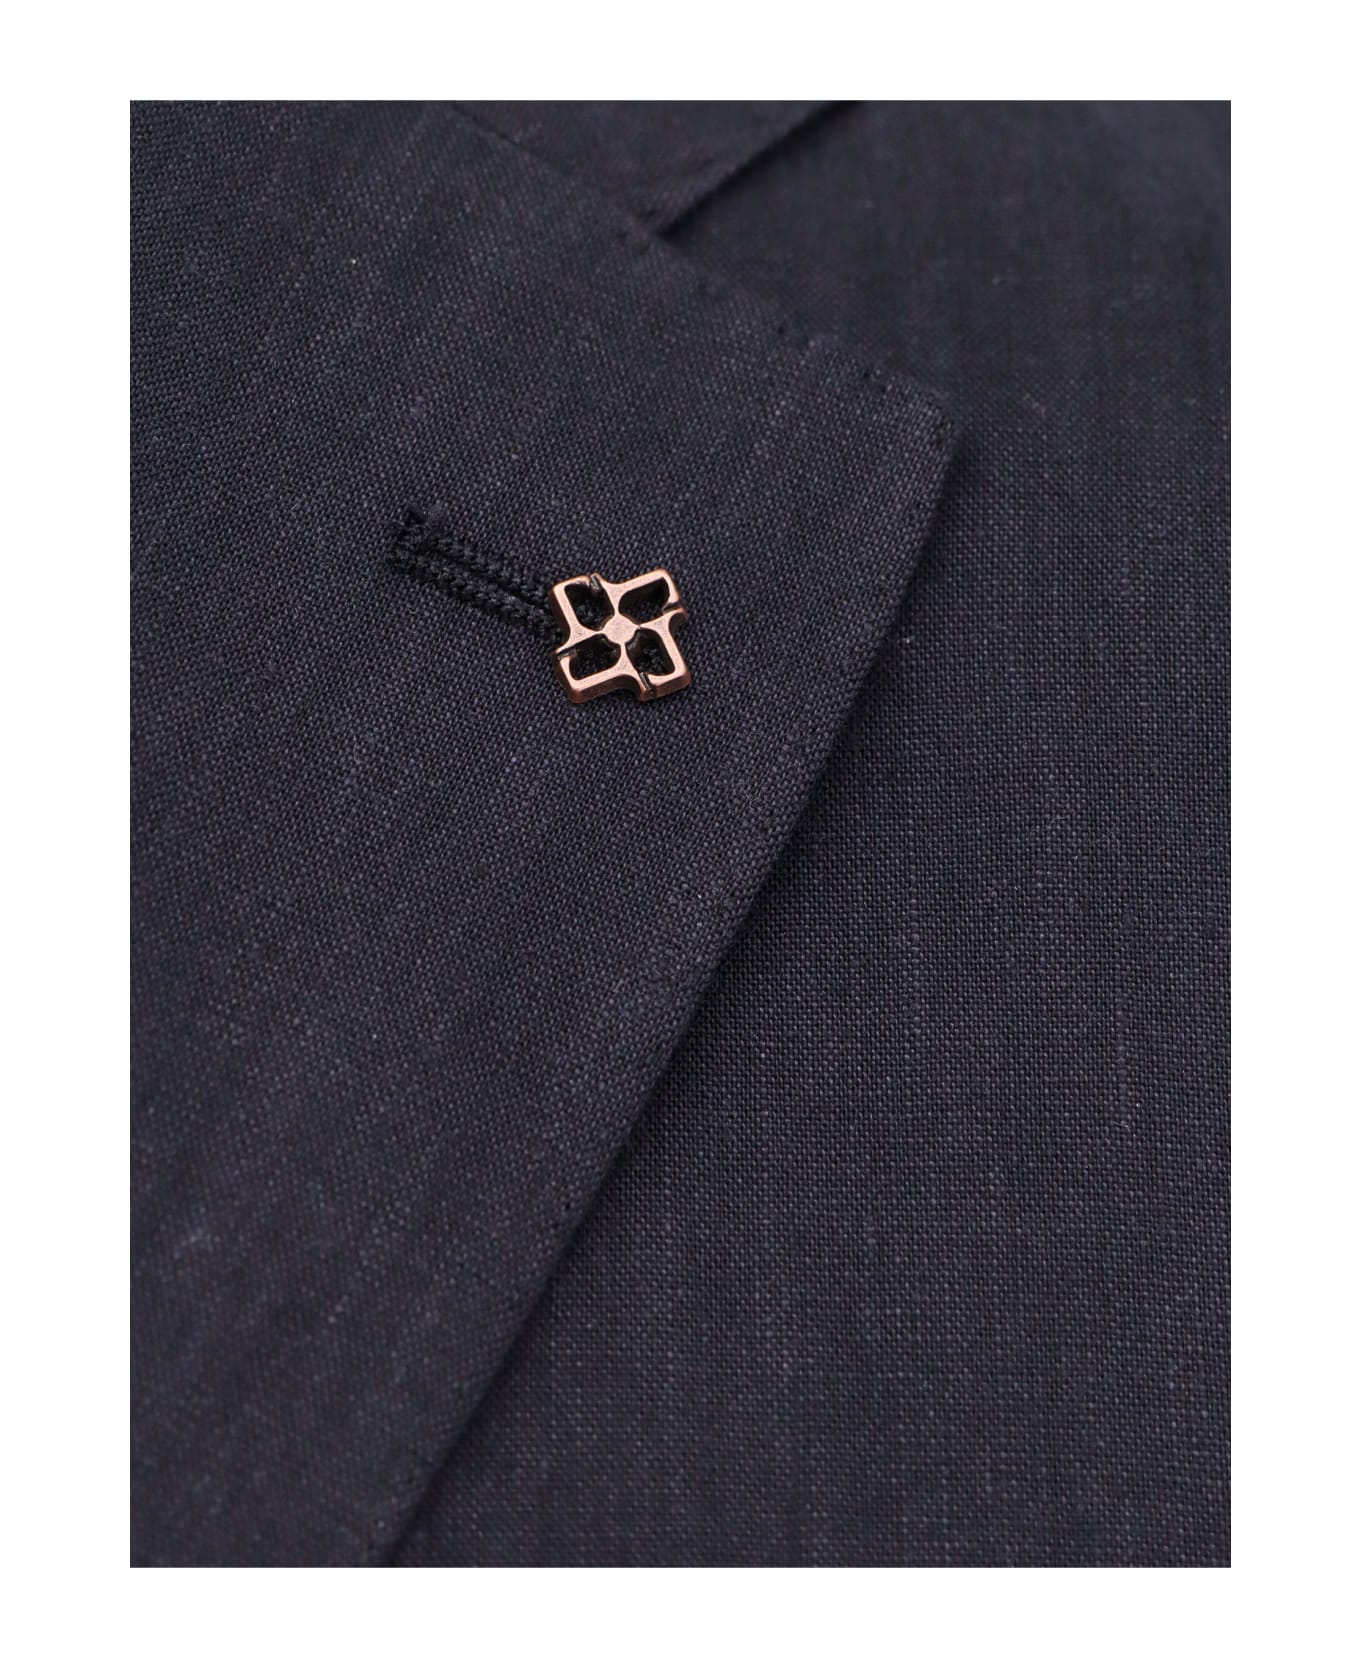 Tagliatore Suit - Blue スーツ